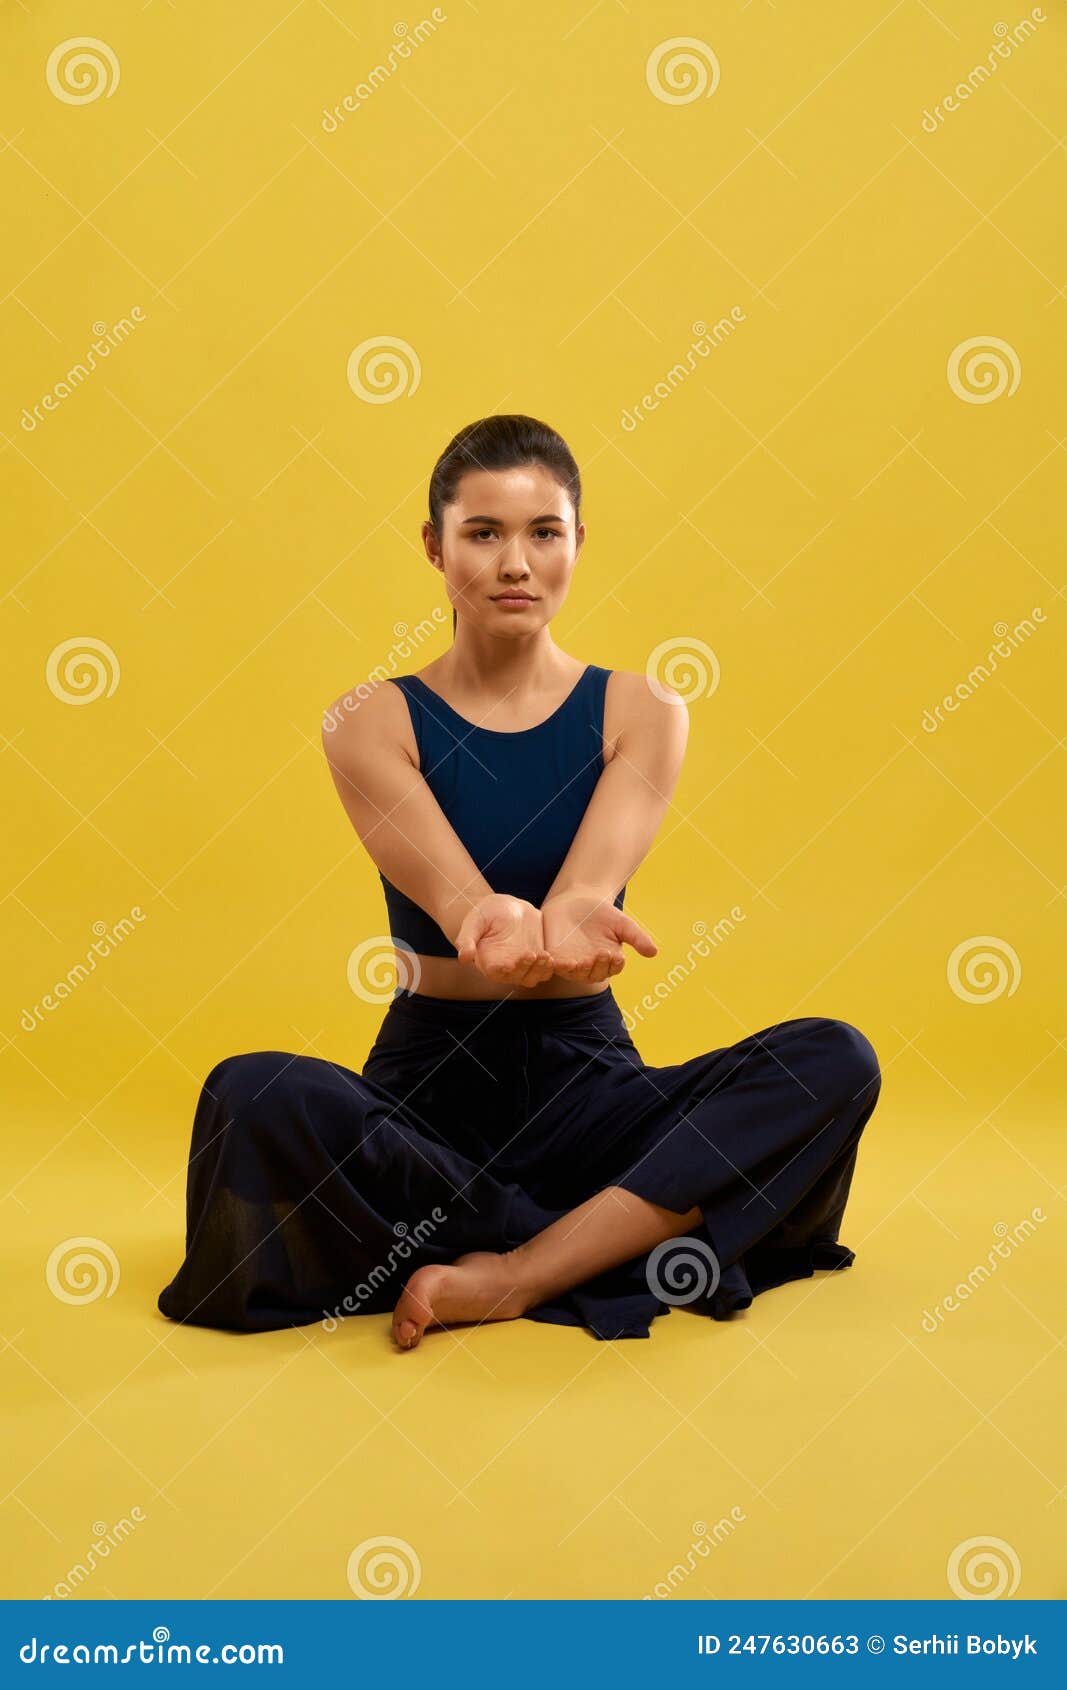 Yoga Sitting Poses Benefits - YogaCanada